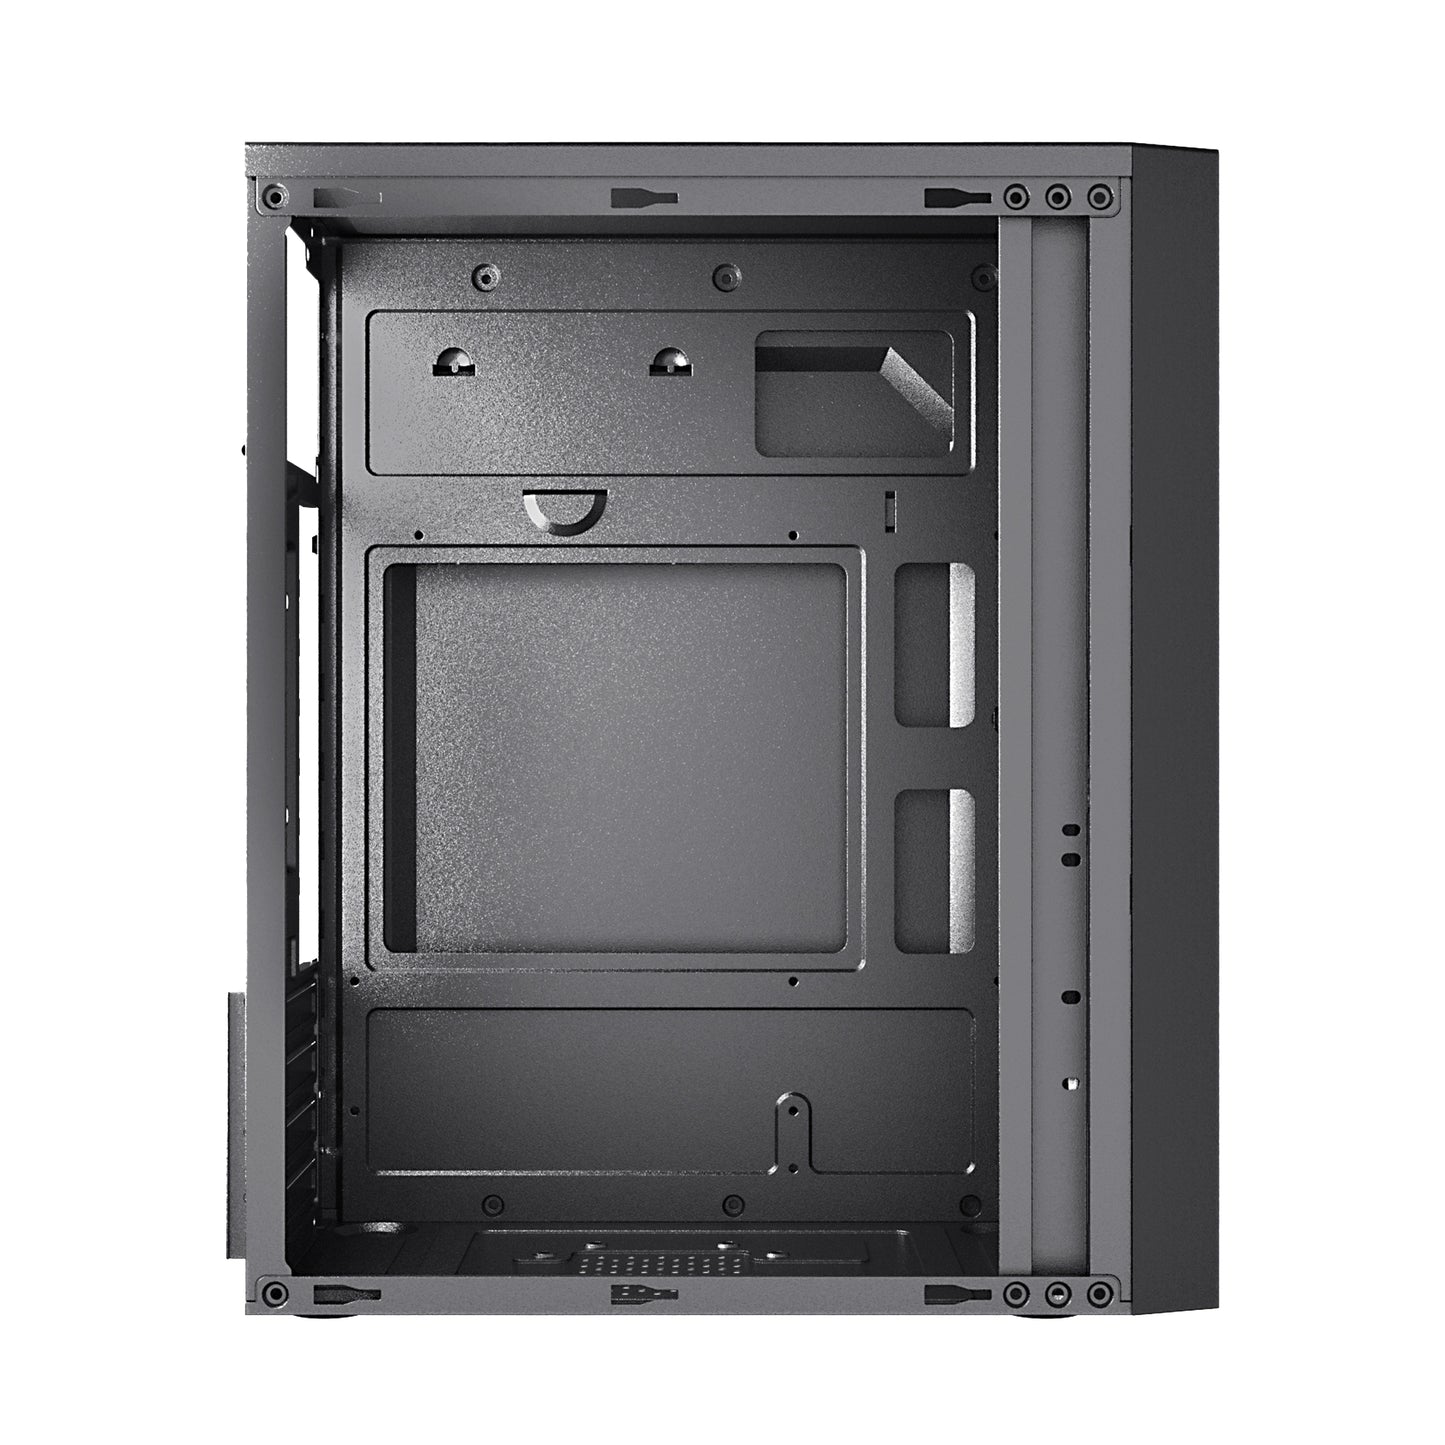 Компьютерный корпус Sbox PCC-05 MicroATX - черный, металл, Mid Tower, M-ATX/ITX, 2x3,5", 1x2,5", без блока питания